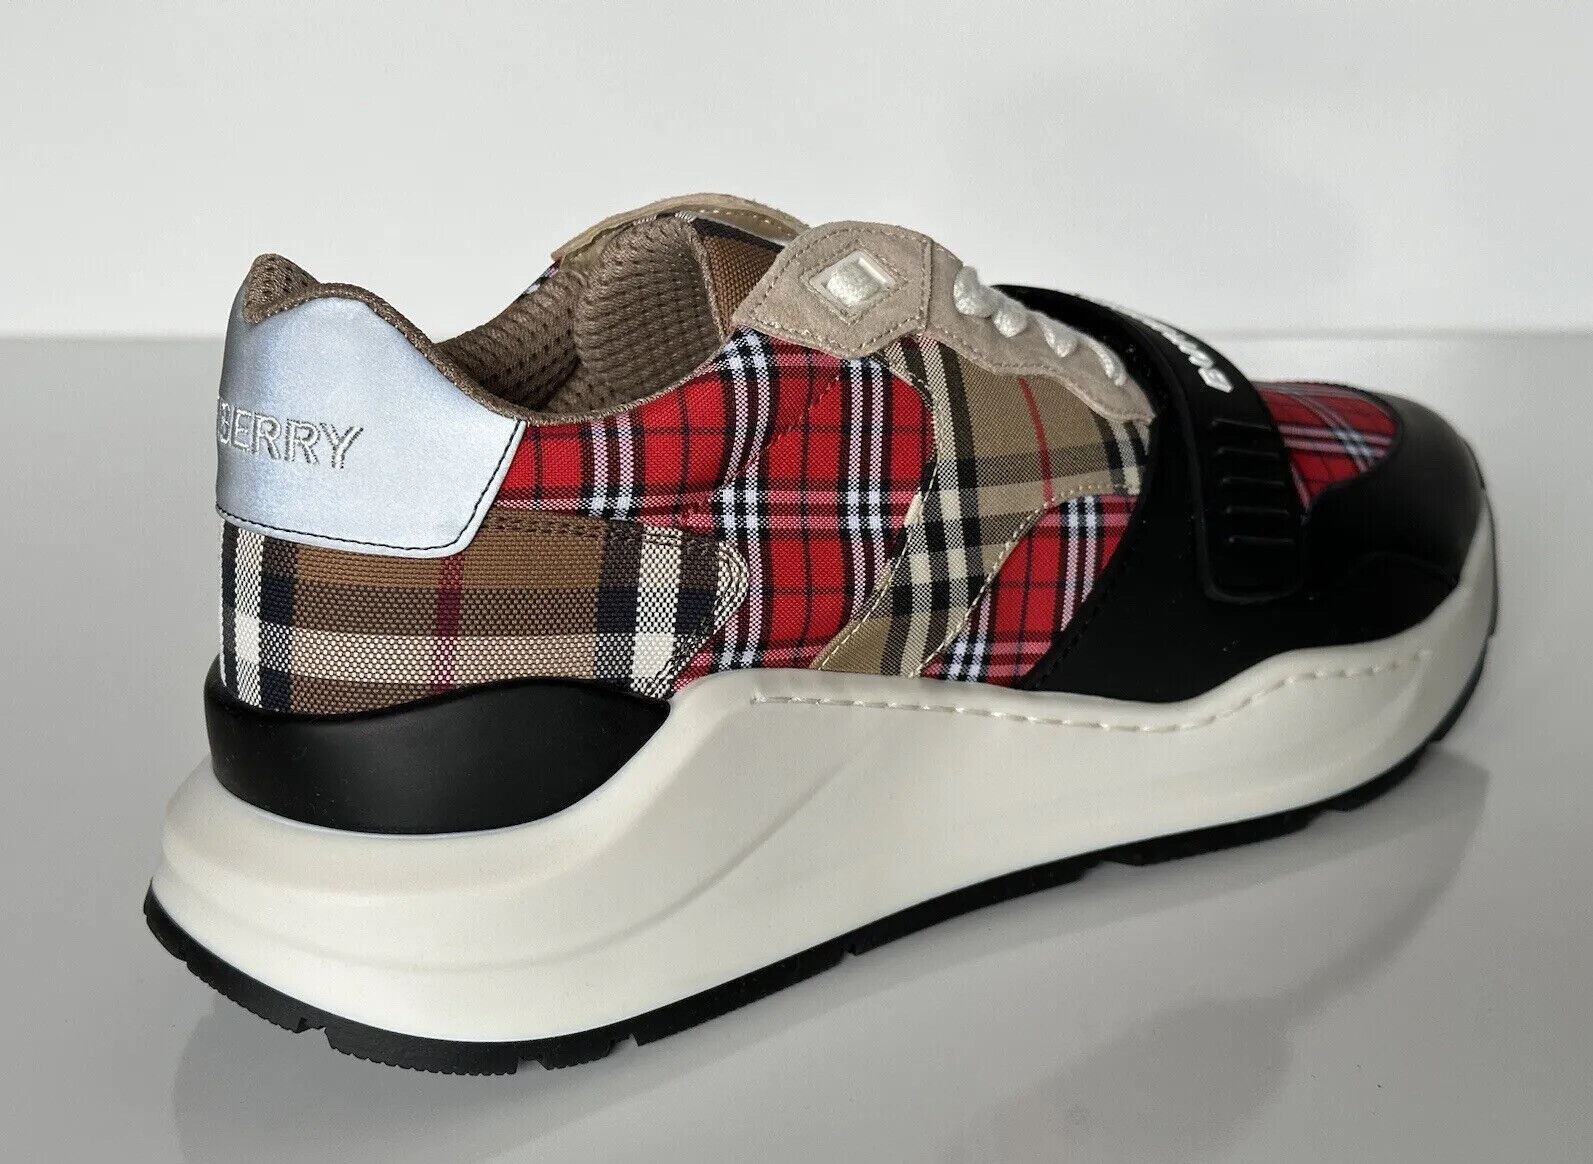 NIB 790 $ Burberry Herren Ramsey Mehrfarbige Sneakers 10 US (43 Euro) 8048632 Italien 